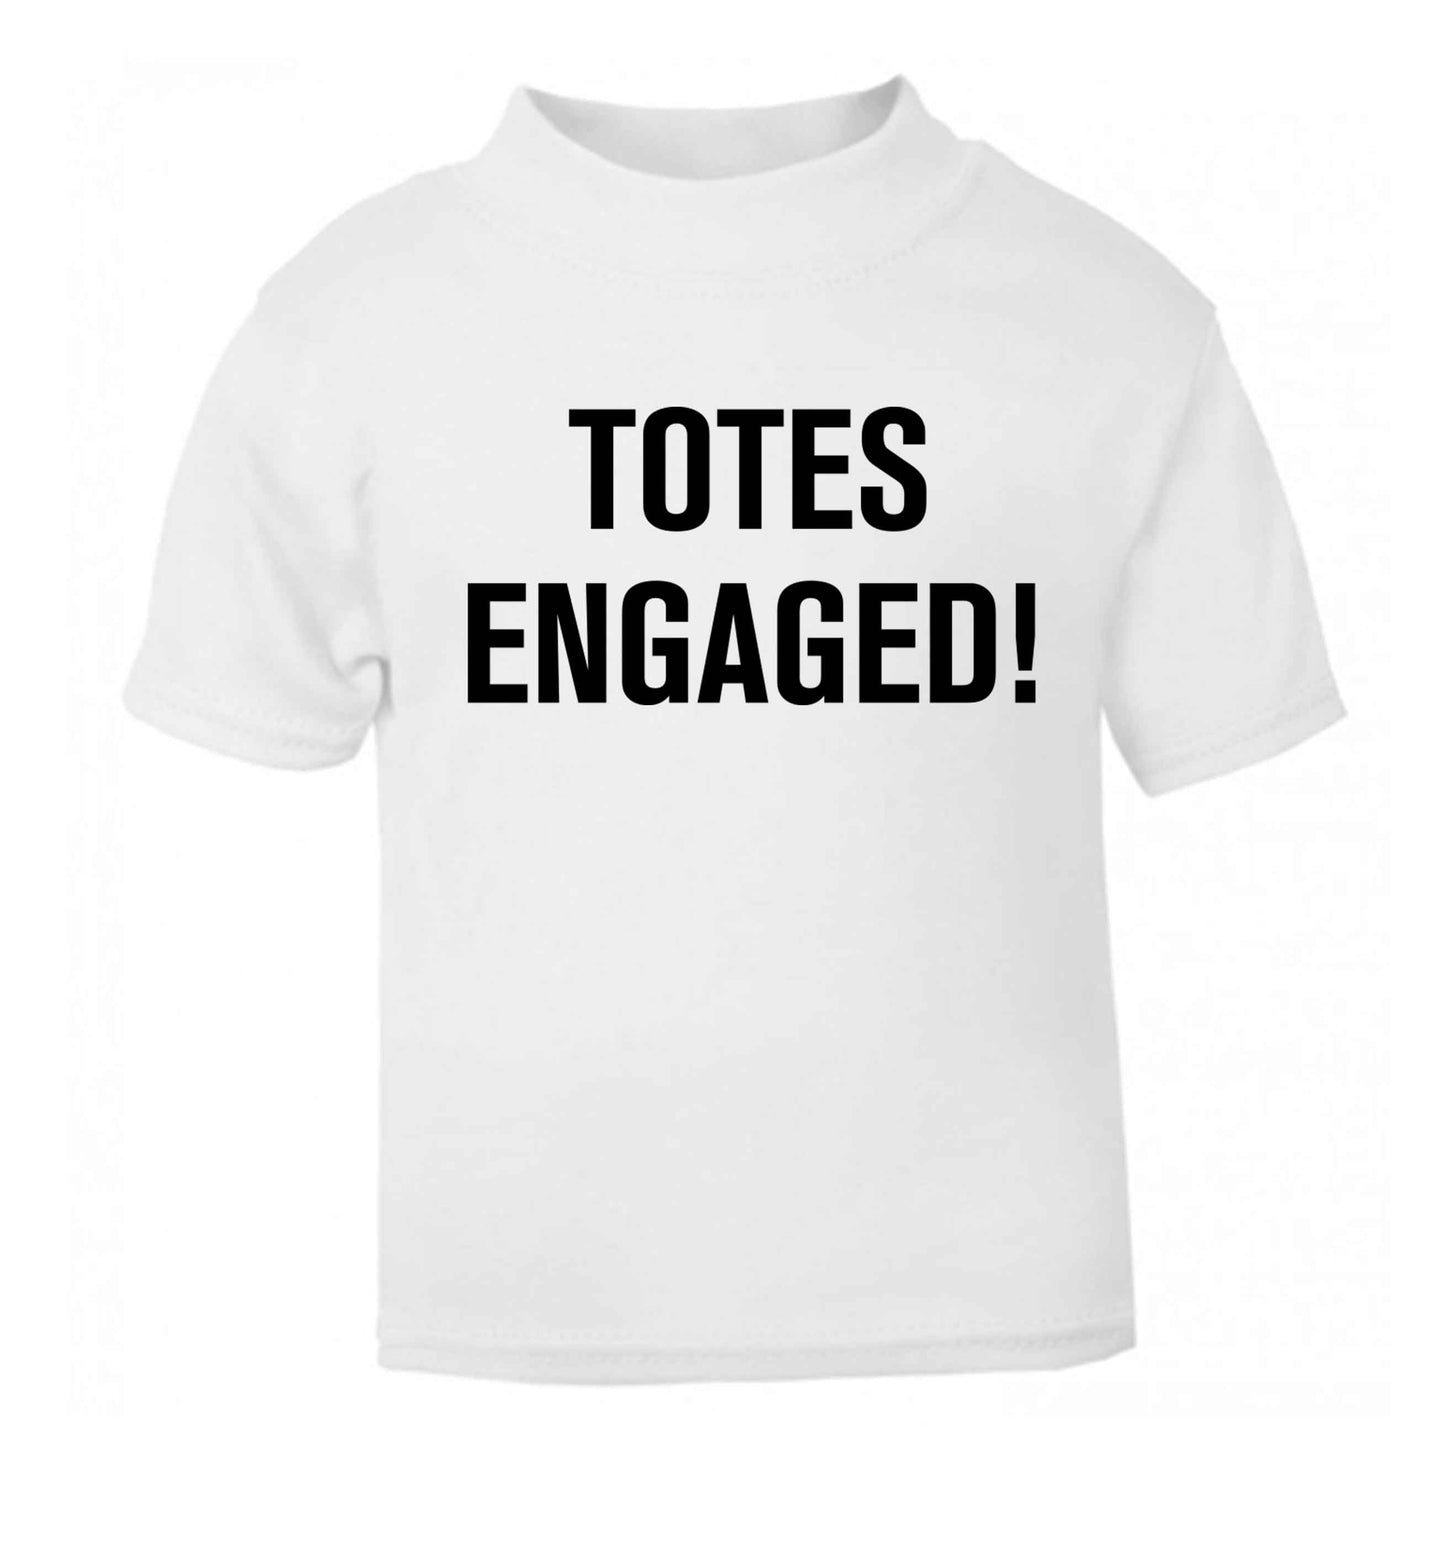 Totes engaged white baby toddler Tshirt 2 Years